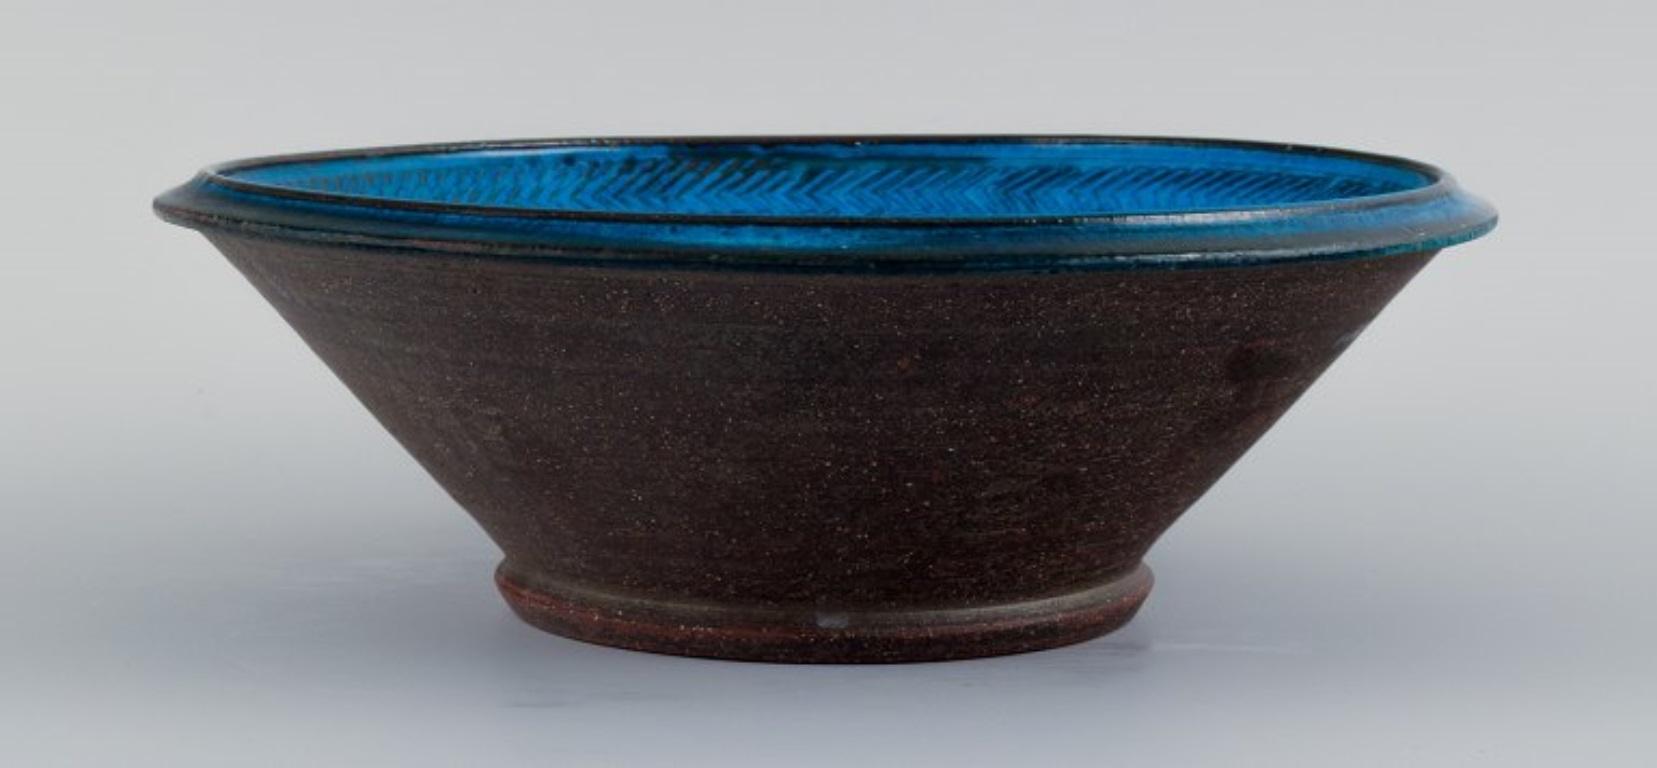 Danish Nils Kähler for Kähler, Ceramic bowl with glaze in blue tones. 1960/70s. For Sale